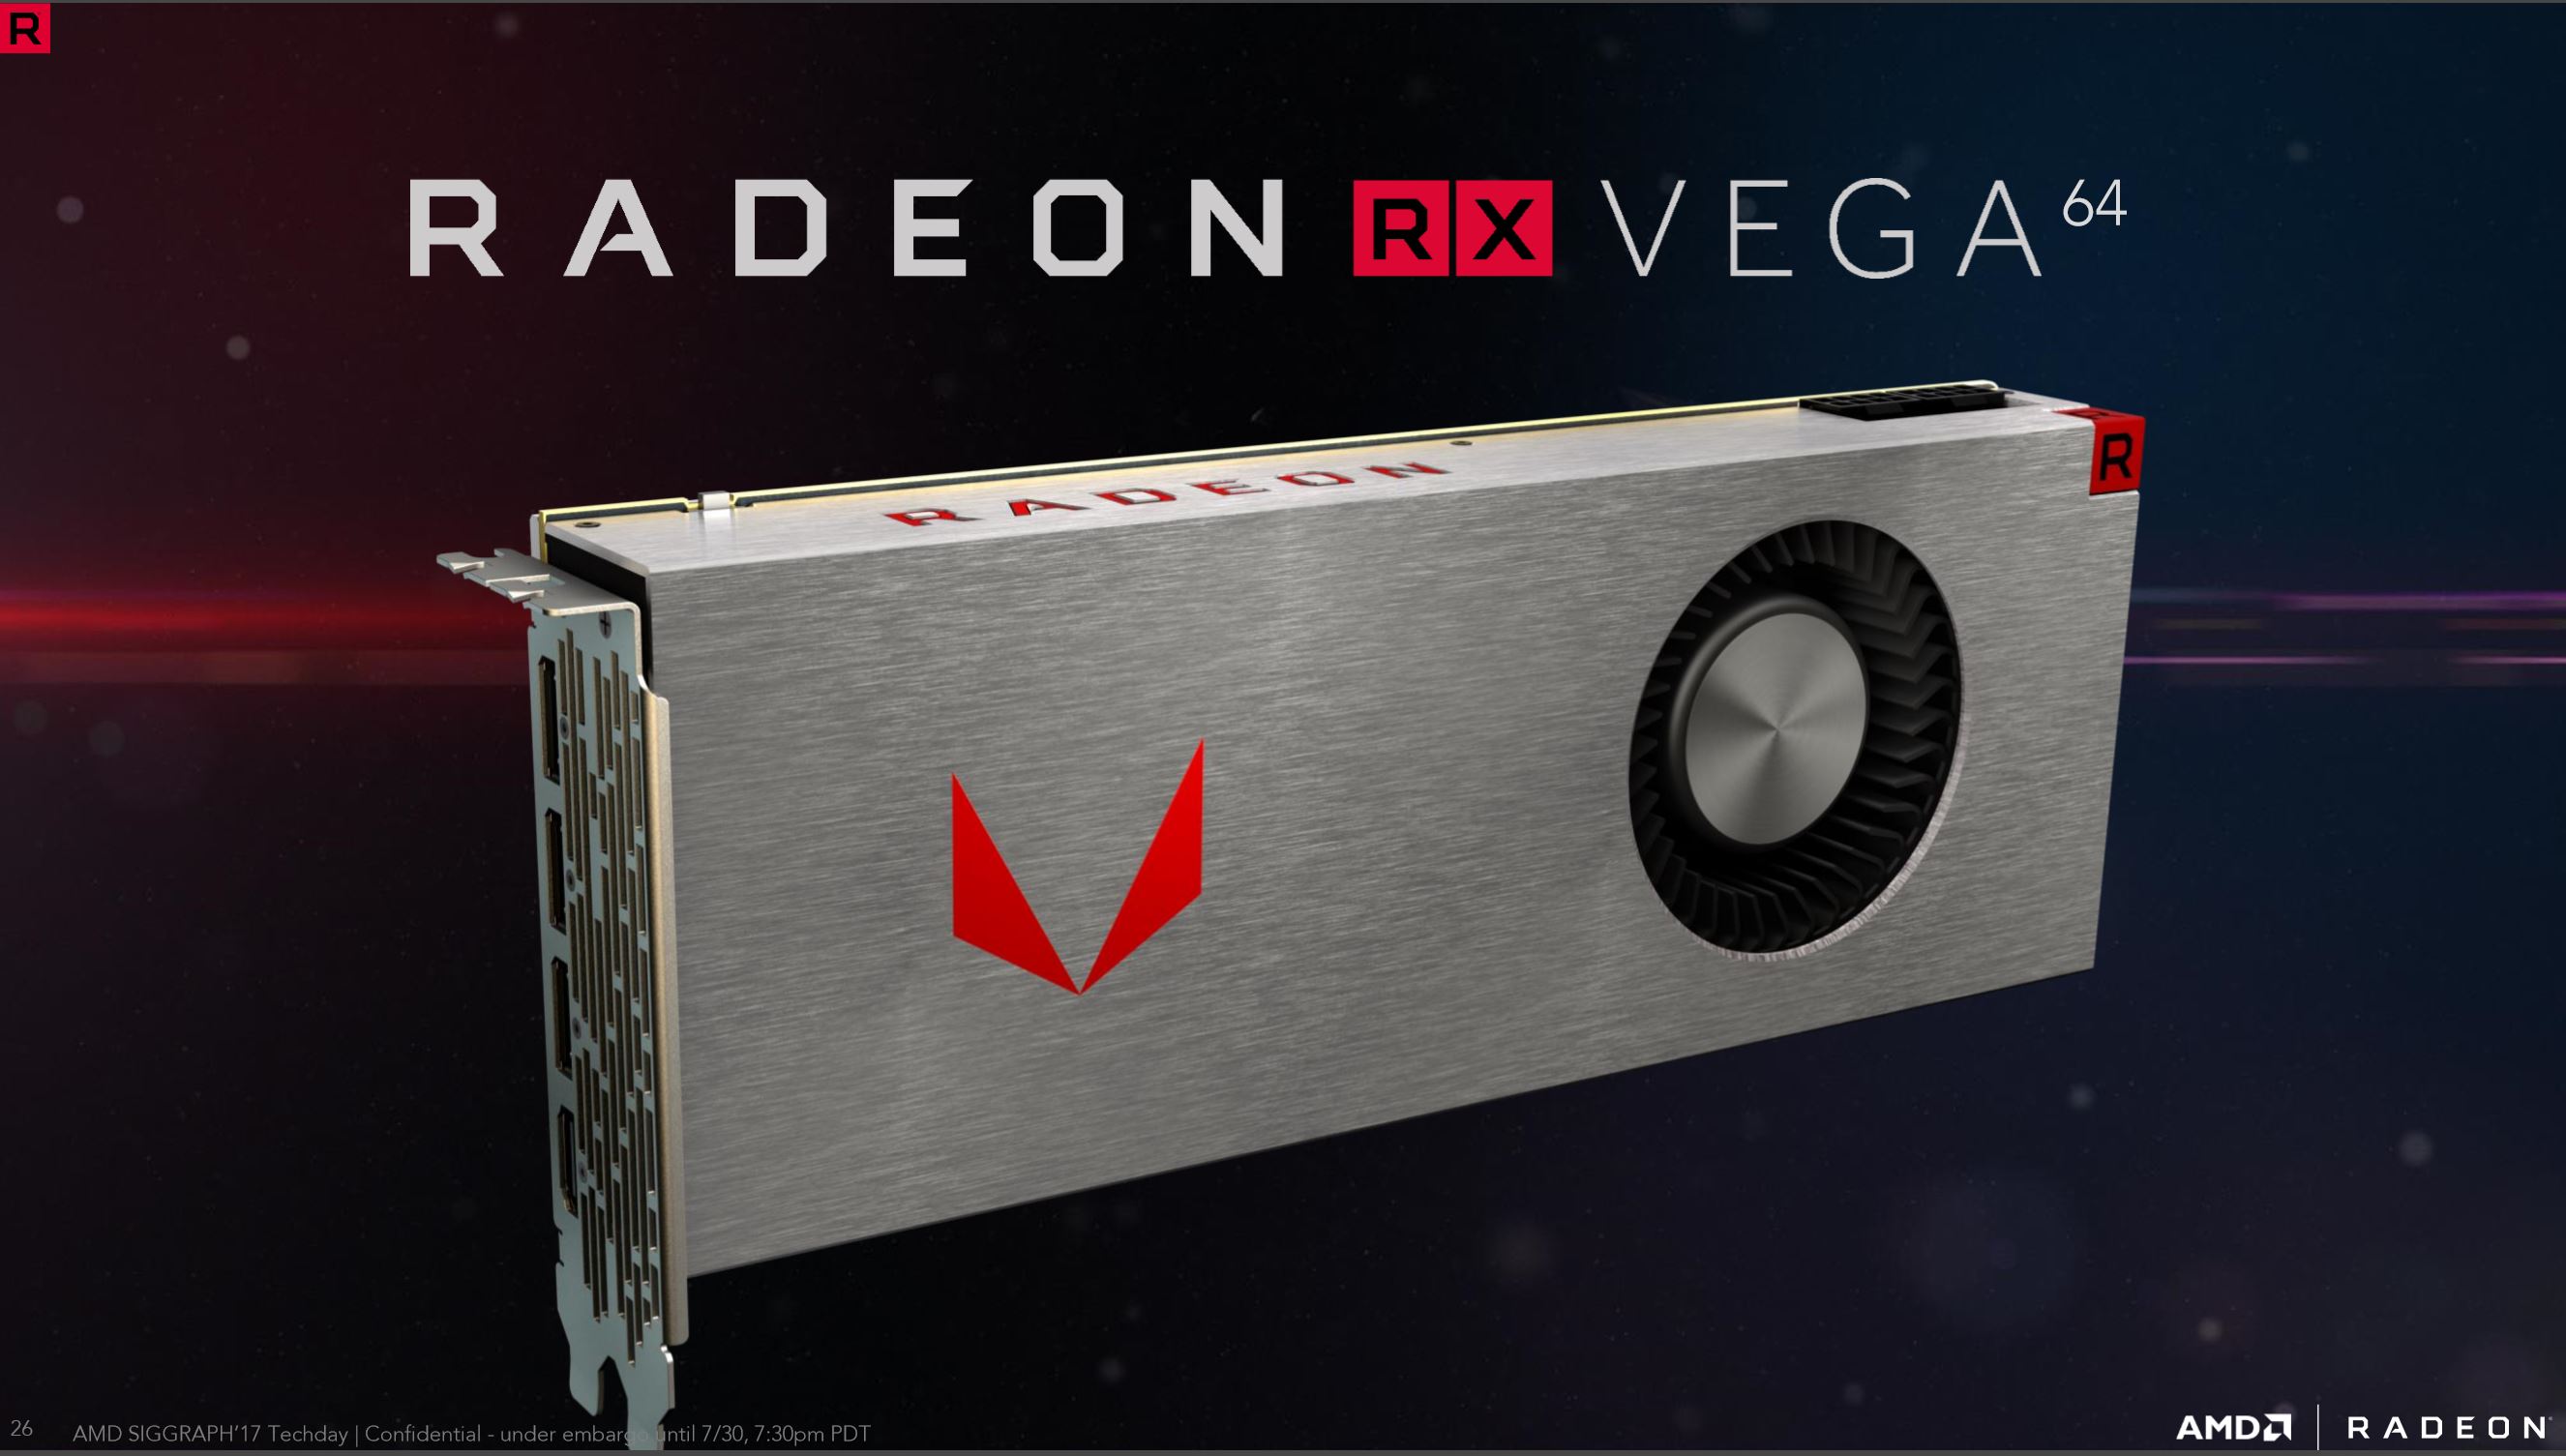 AMD finally unveils Radeon RX Vega 64 